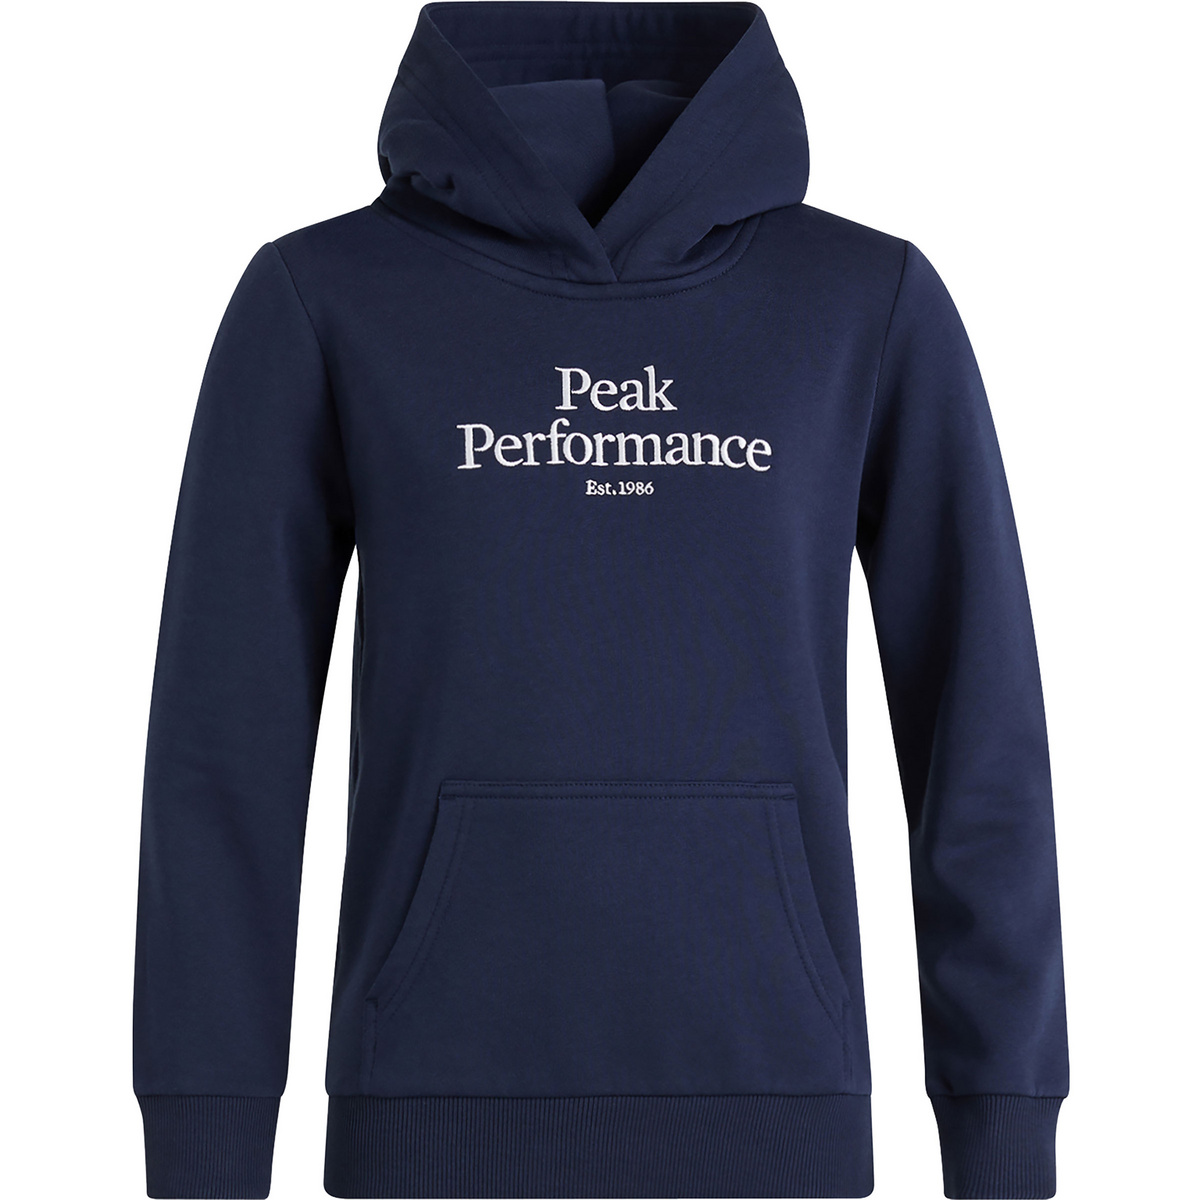 Peak Performance Kinder Original Hoodie von Peak Performance